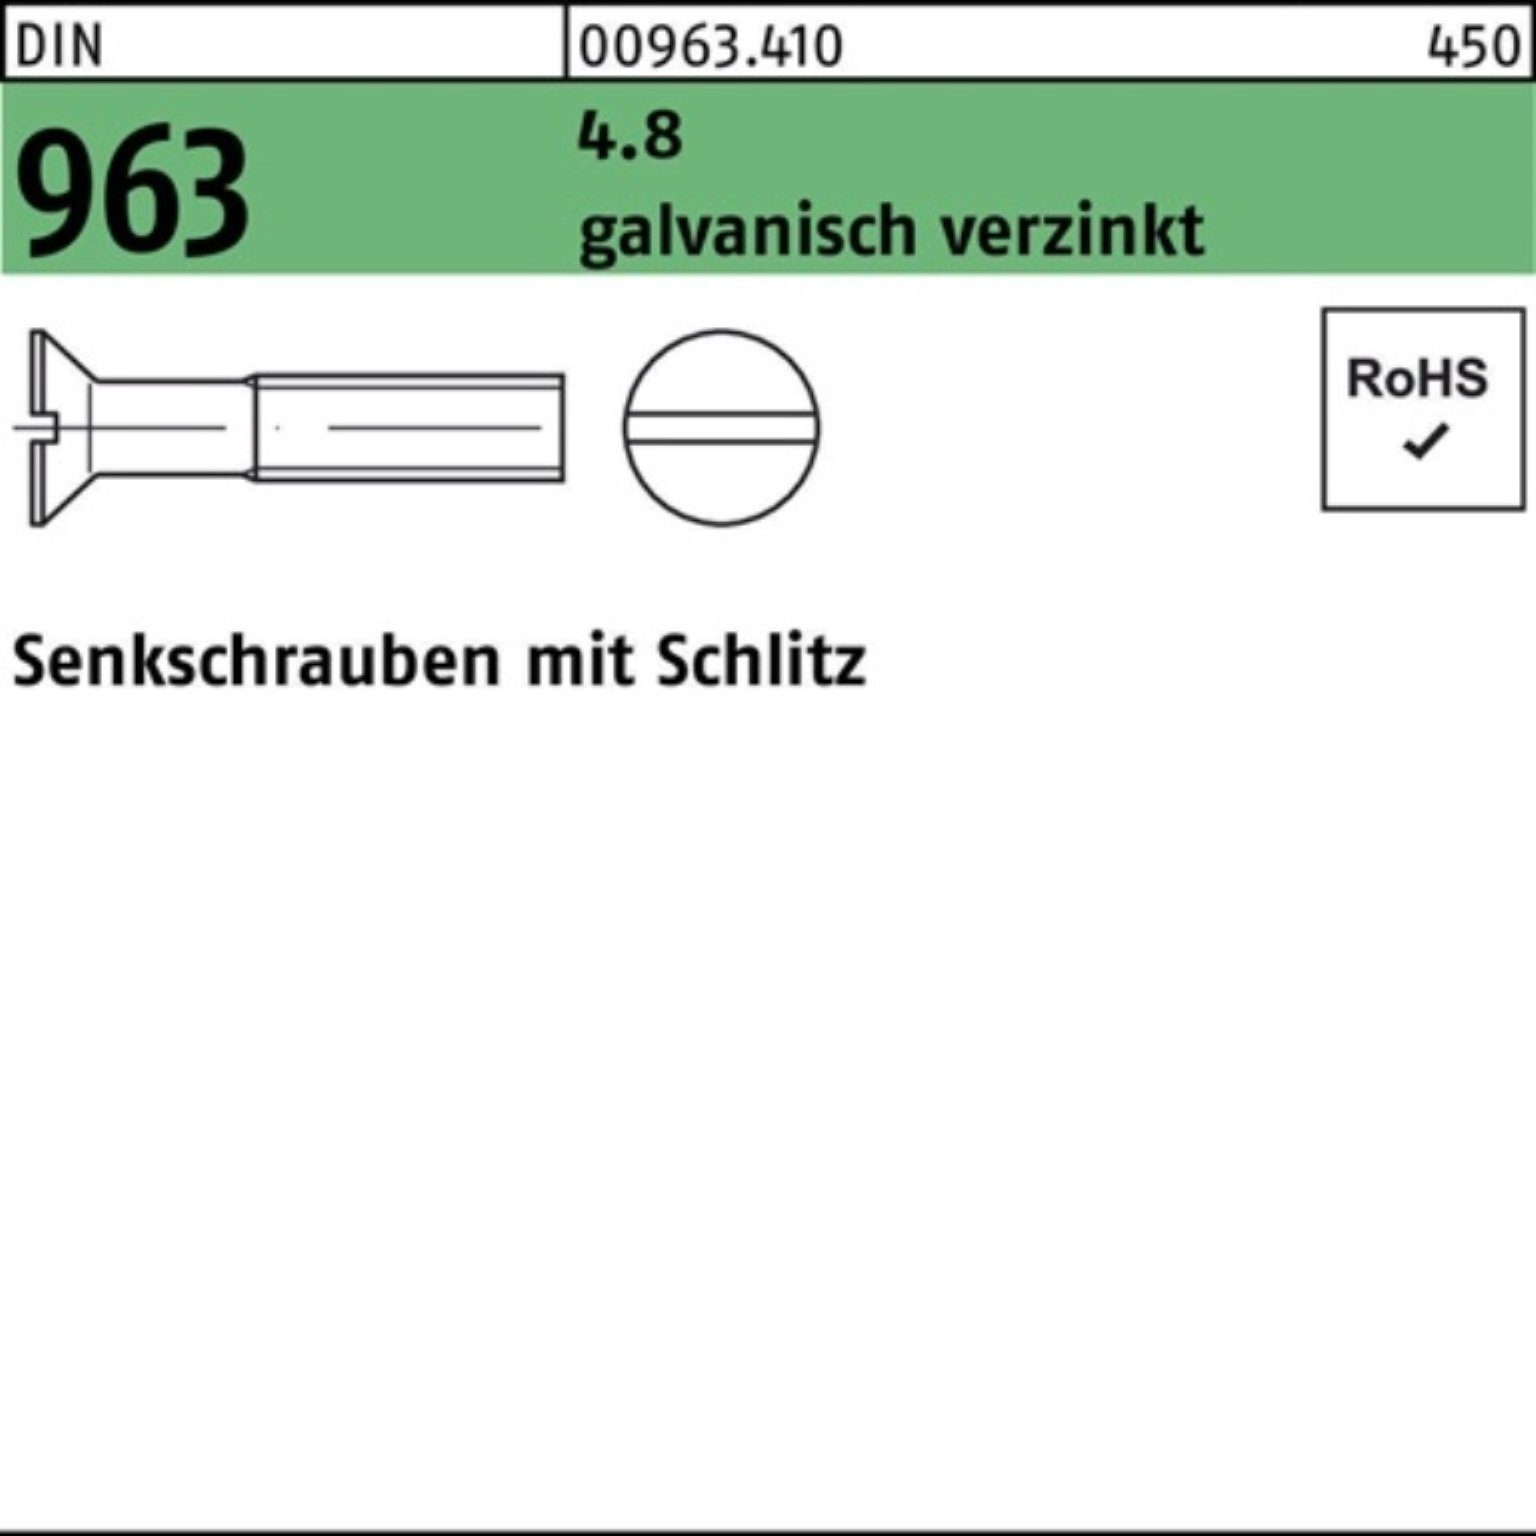 40 Pack 200er Senkschraube Stü 4.8 M5x Schlitz DIN 200 Reyher galv.verz. Senkschraube 963